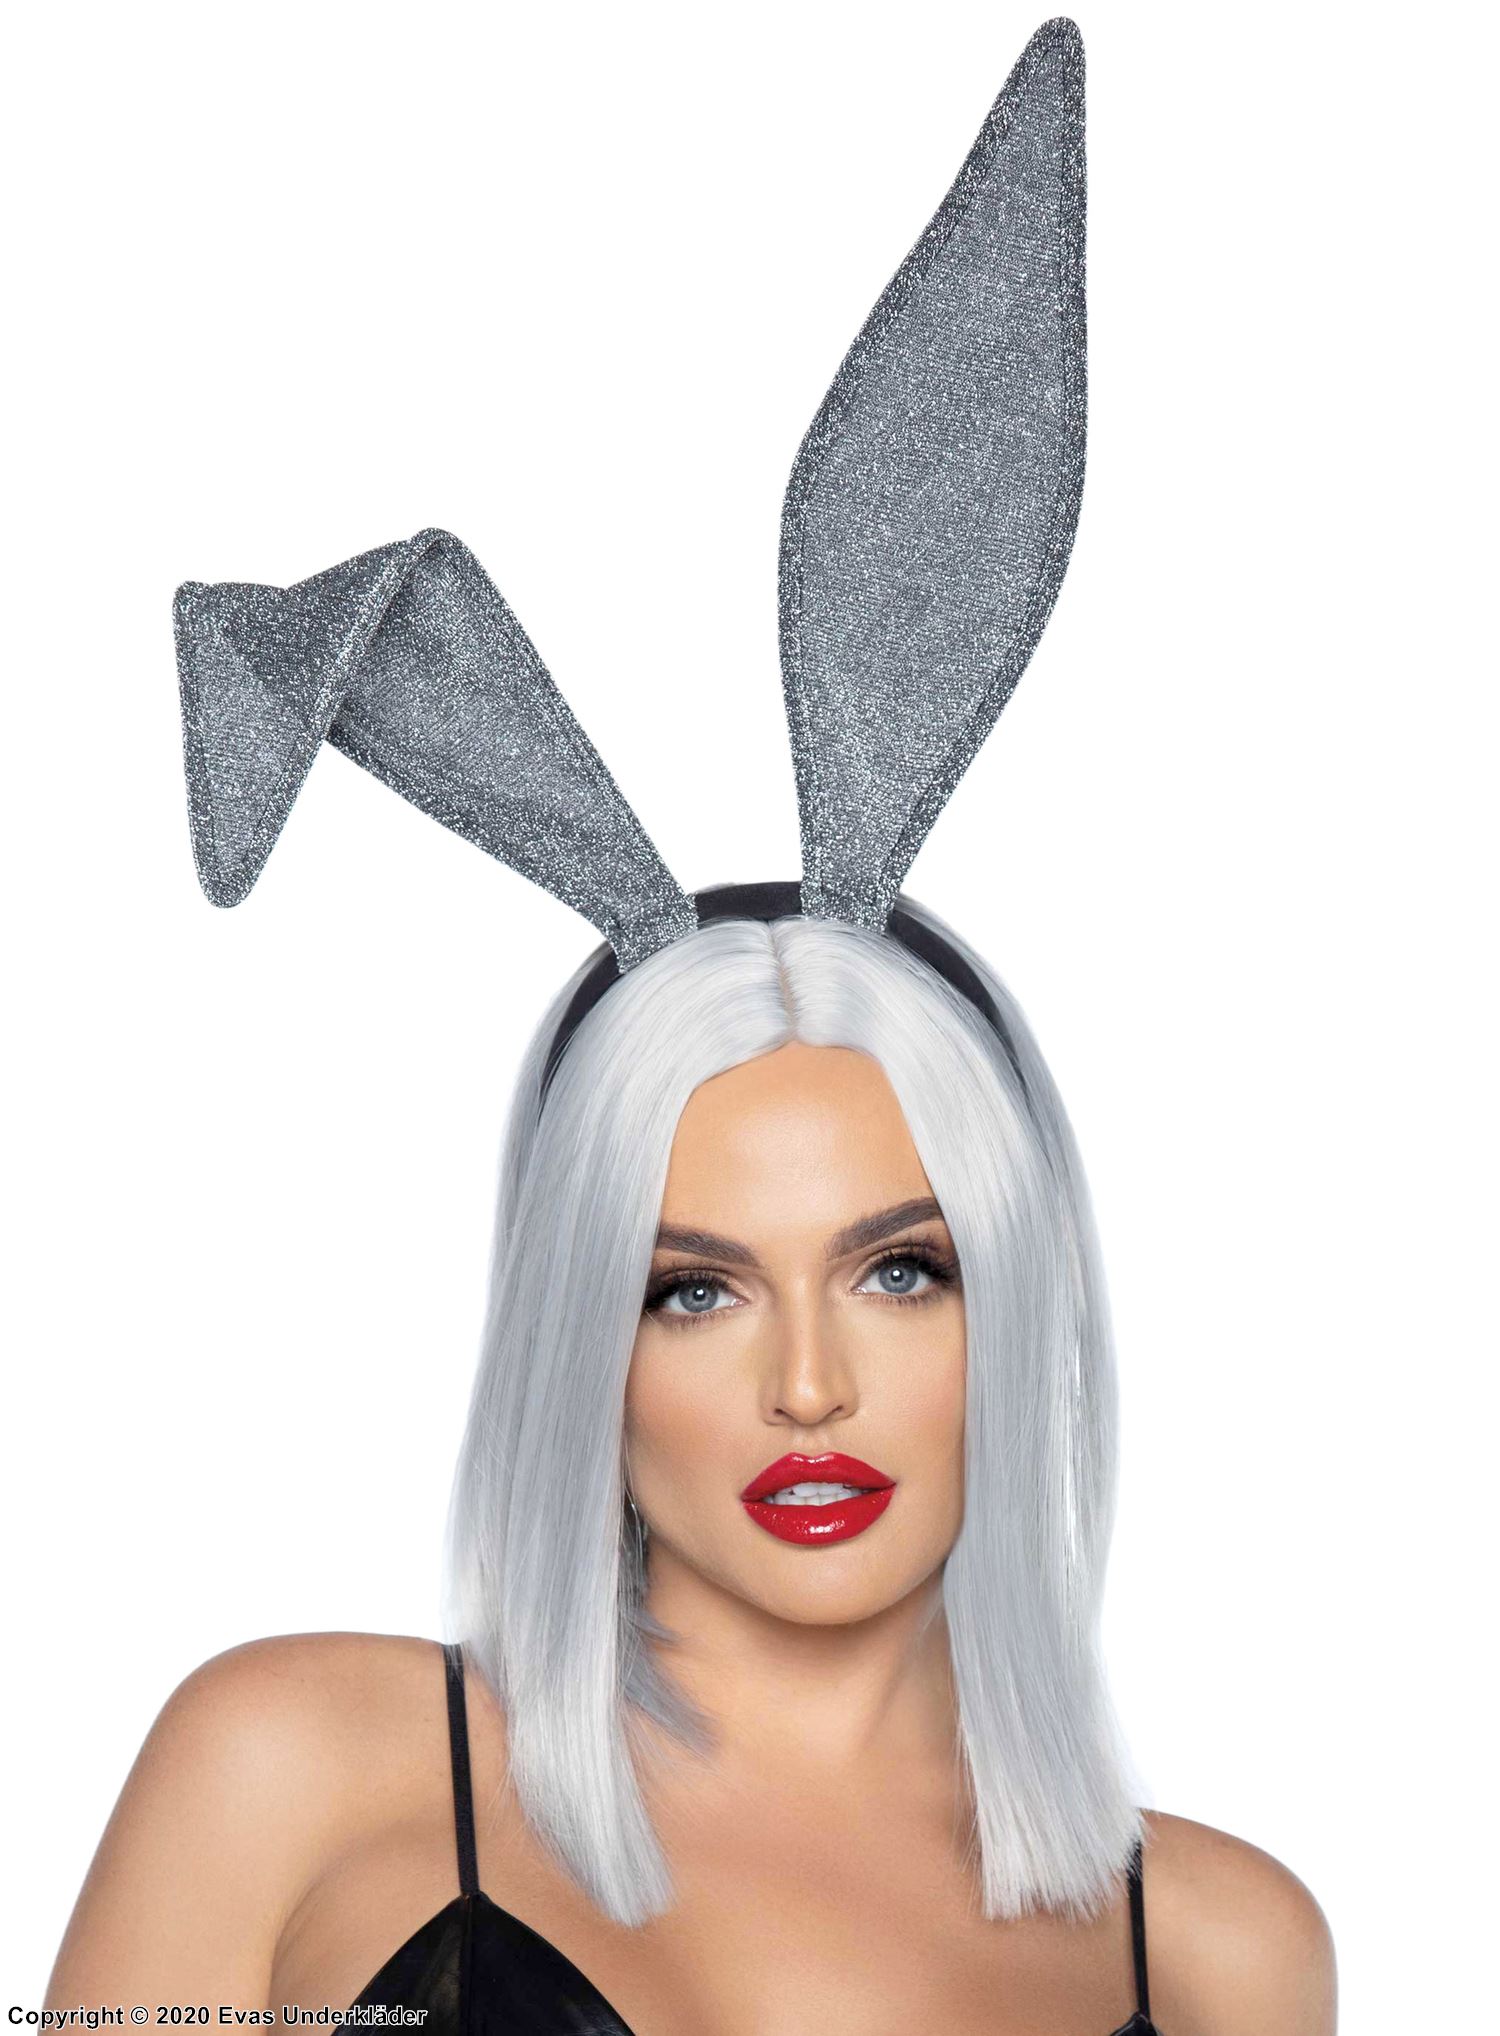 Bunny (woman), costume headband, glitter, big ears